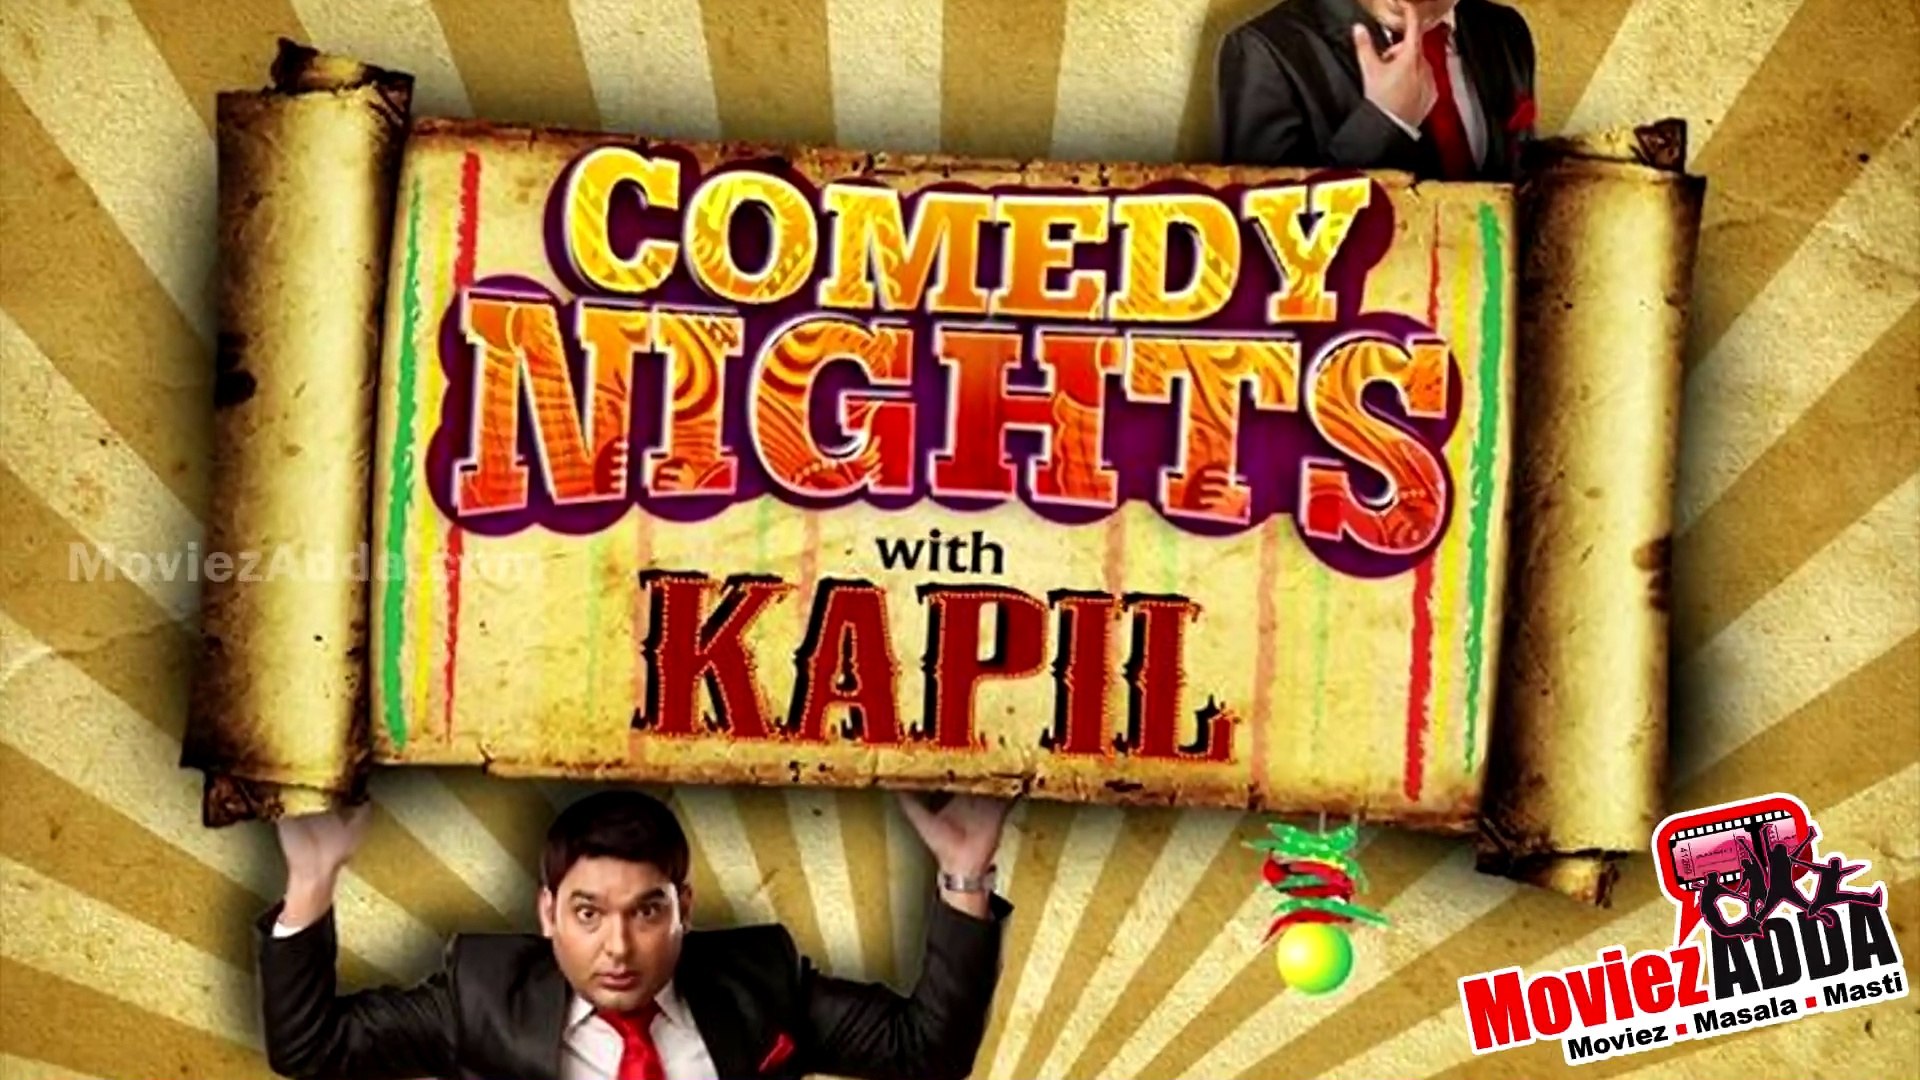 Comedy show with Kohli